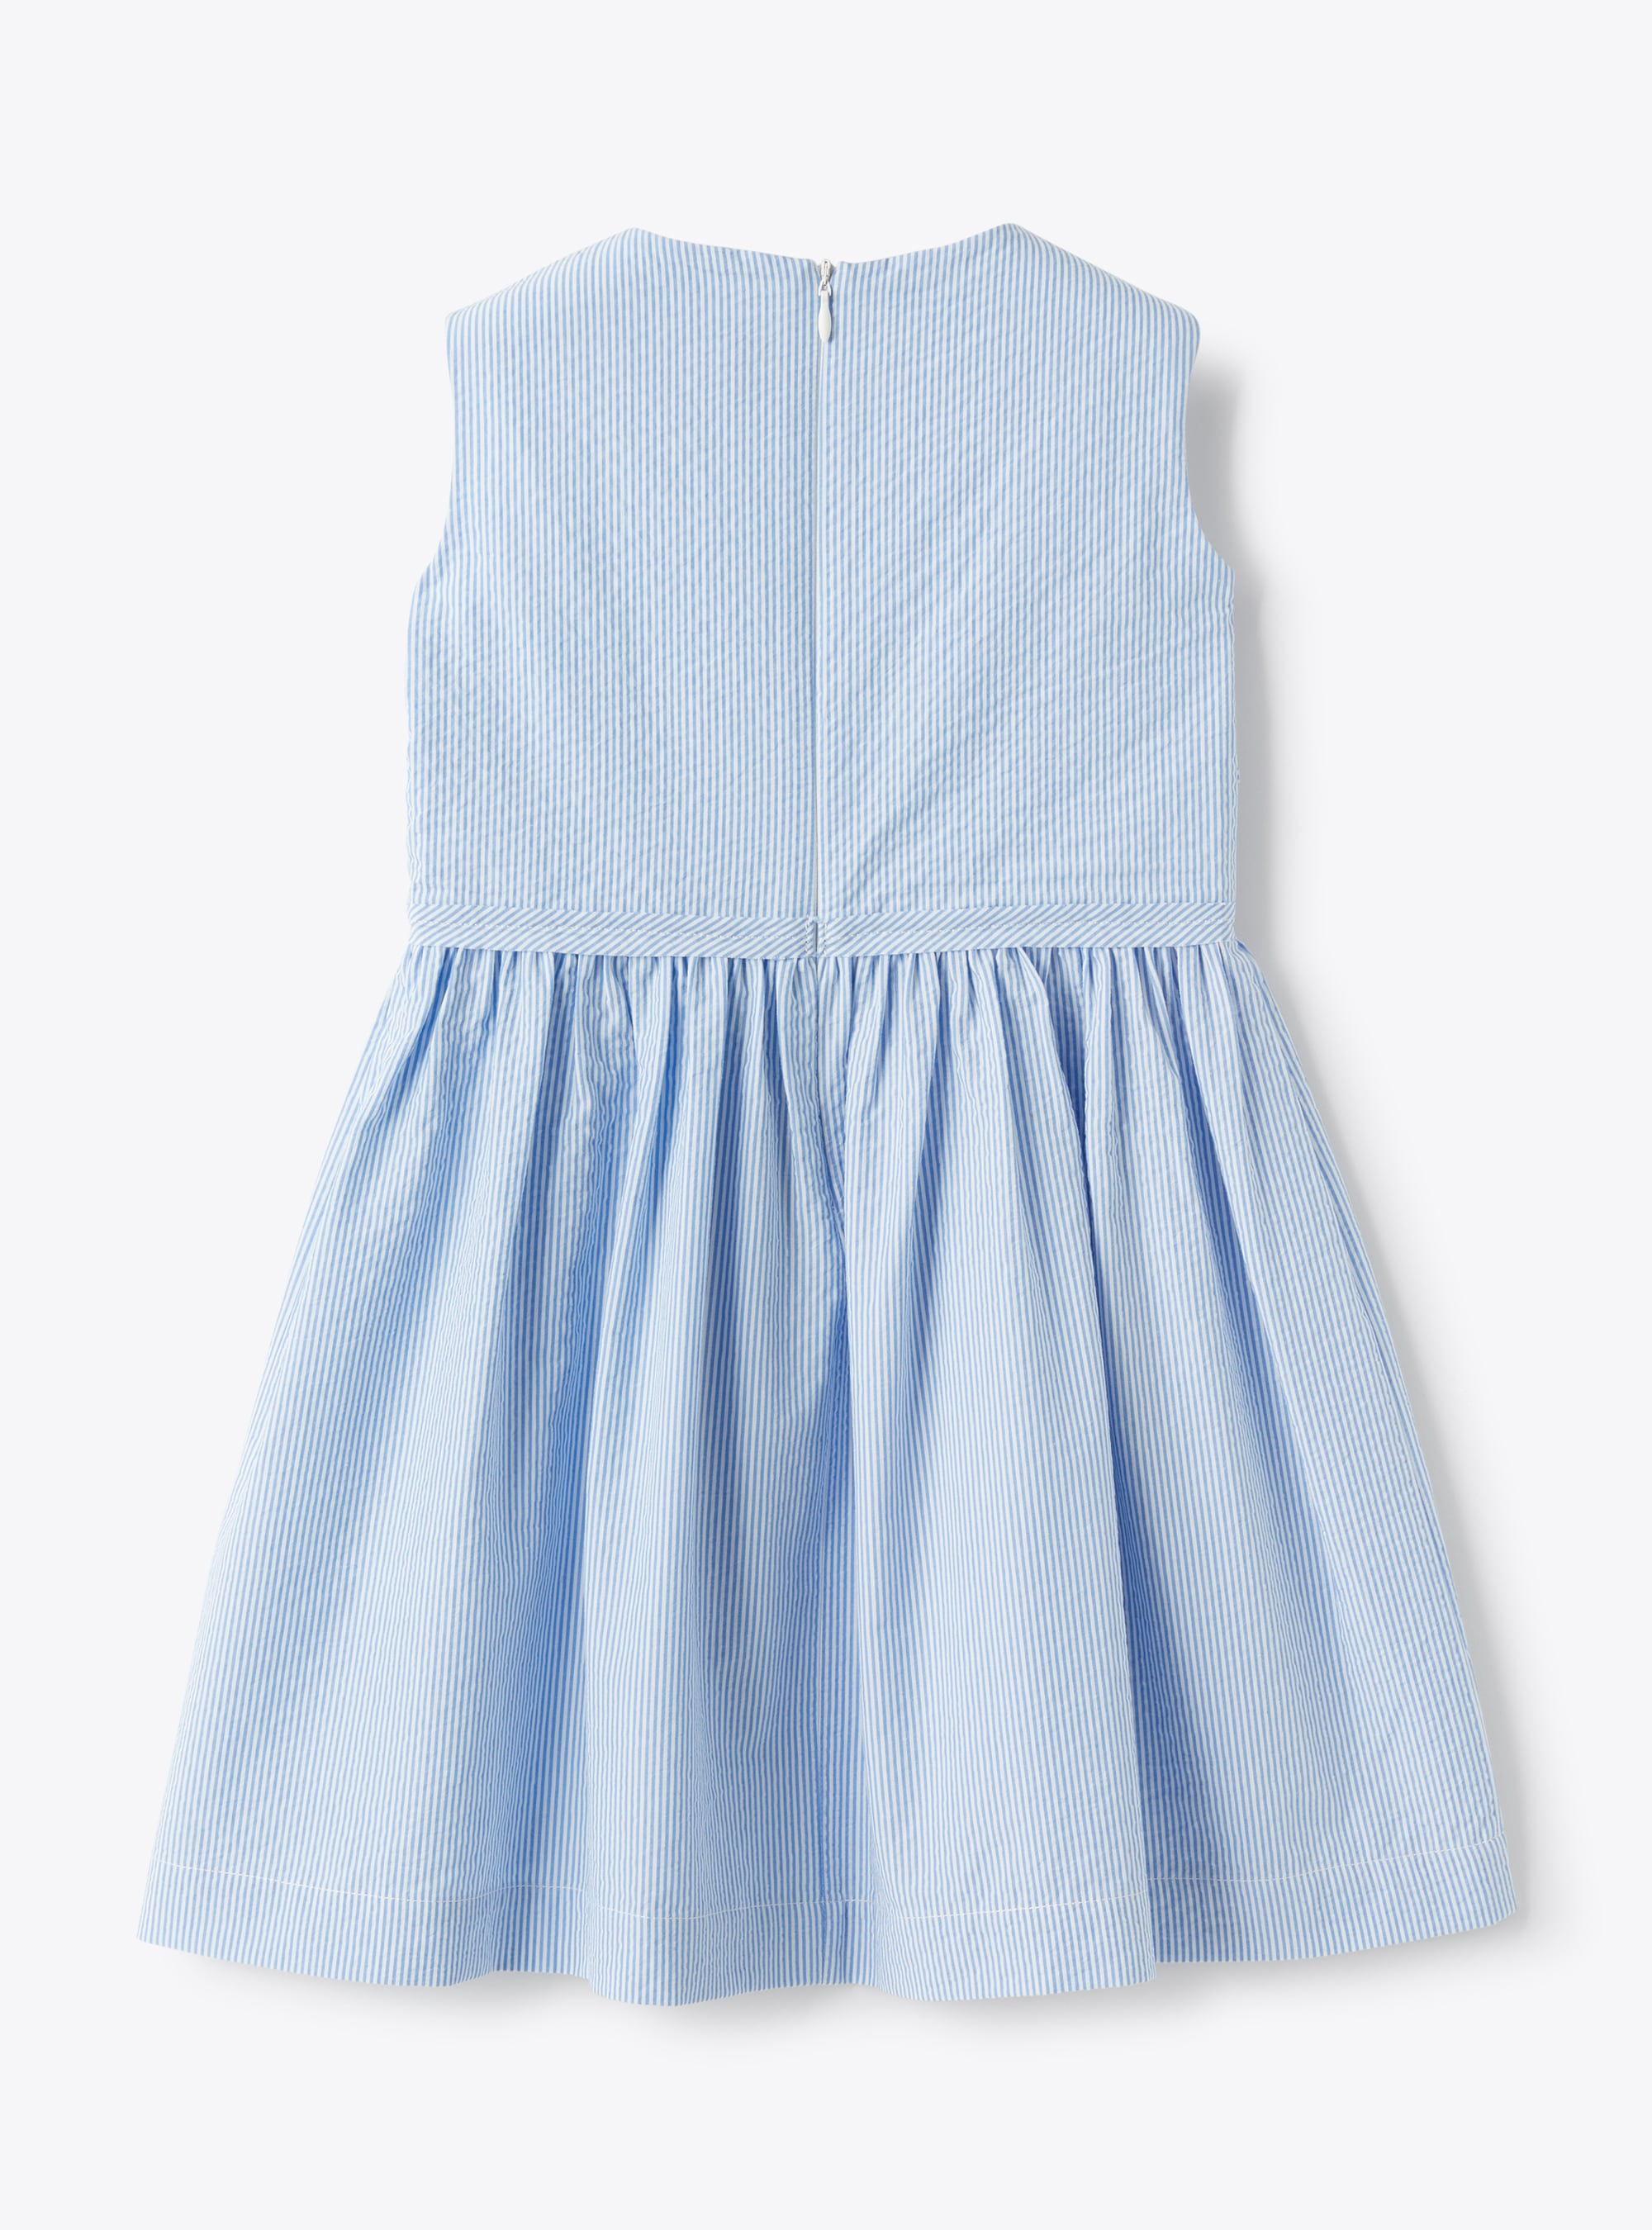 Sleeveless dress in blue-&-white-striped seersucker - Brown | Il Gufo